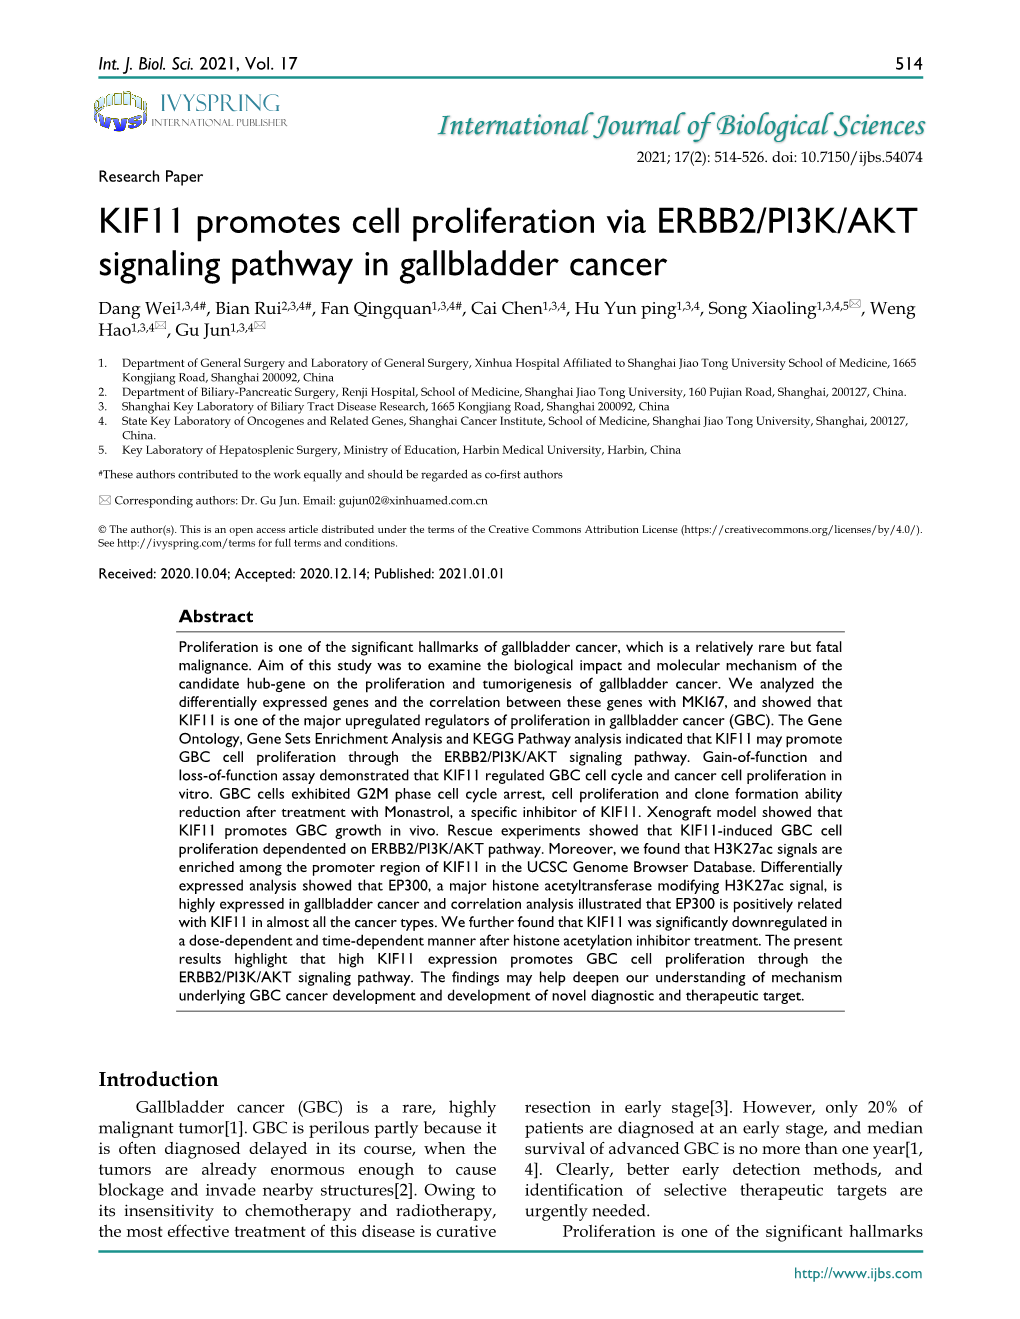 KIF11 Promotes Cell Proliferation Via ERBB2/PI3K/AKT Signaling